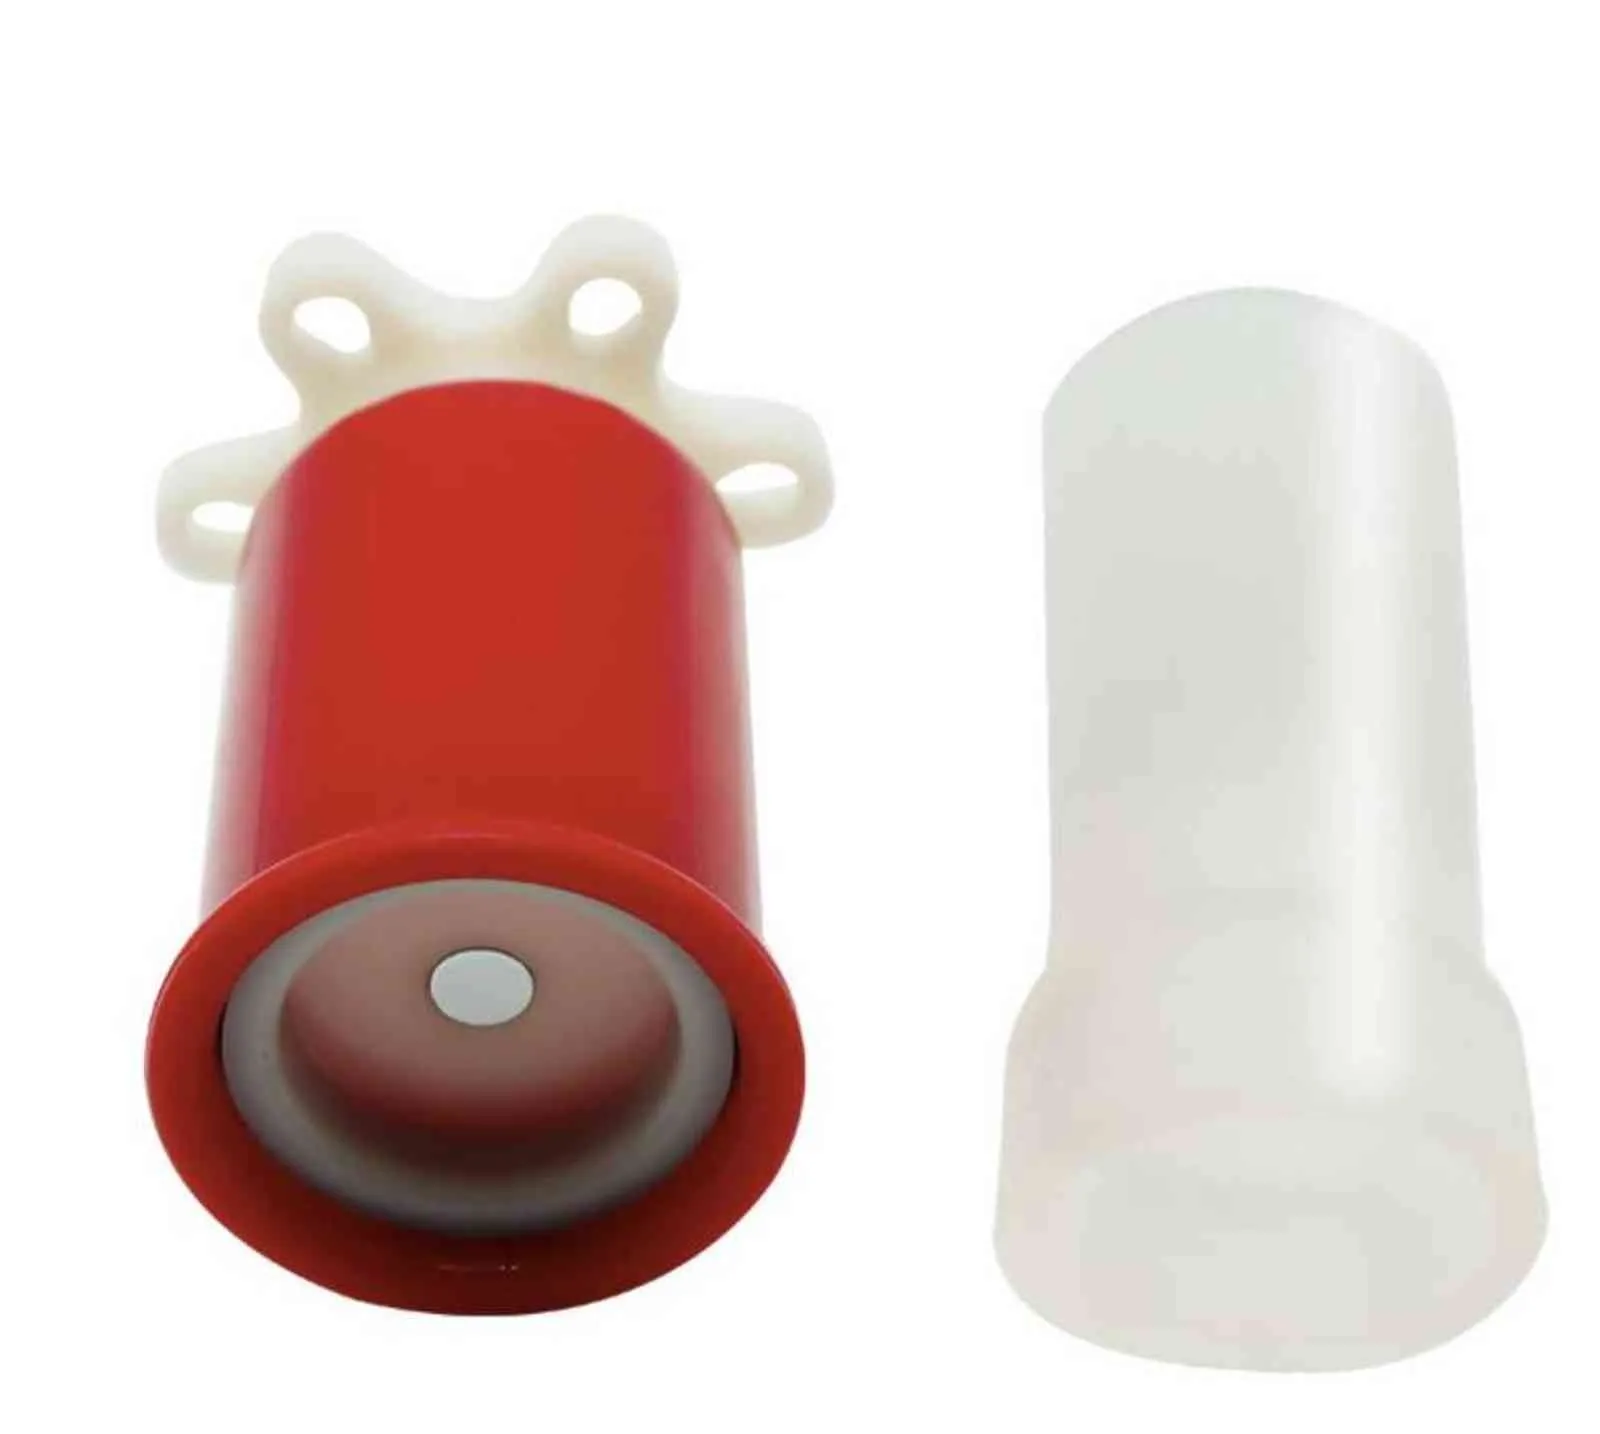 NXY Sexpumpe Spielzeug Penis Vakuumpumpe Gerät zur Penisvergrößerung Extender Penisvergrößerung Extender Sexspielzeug 1125